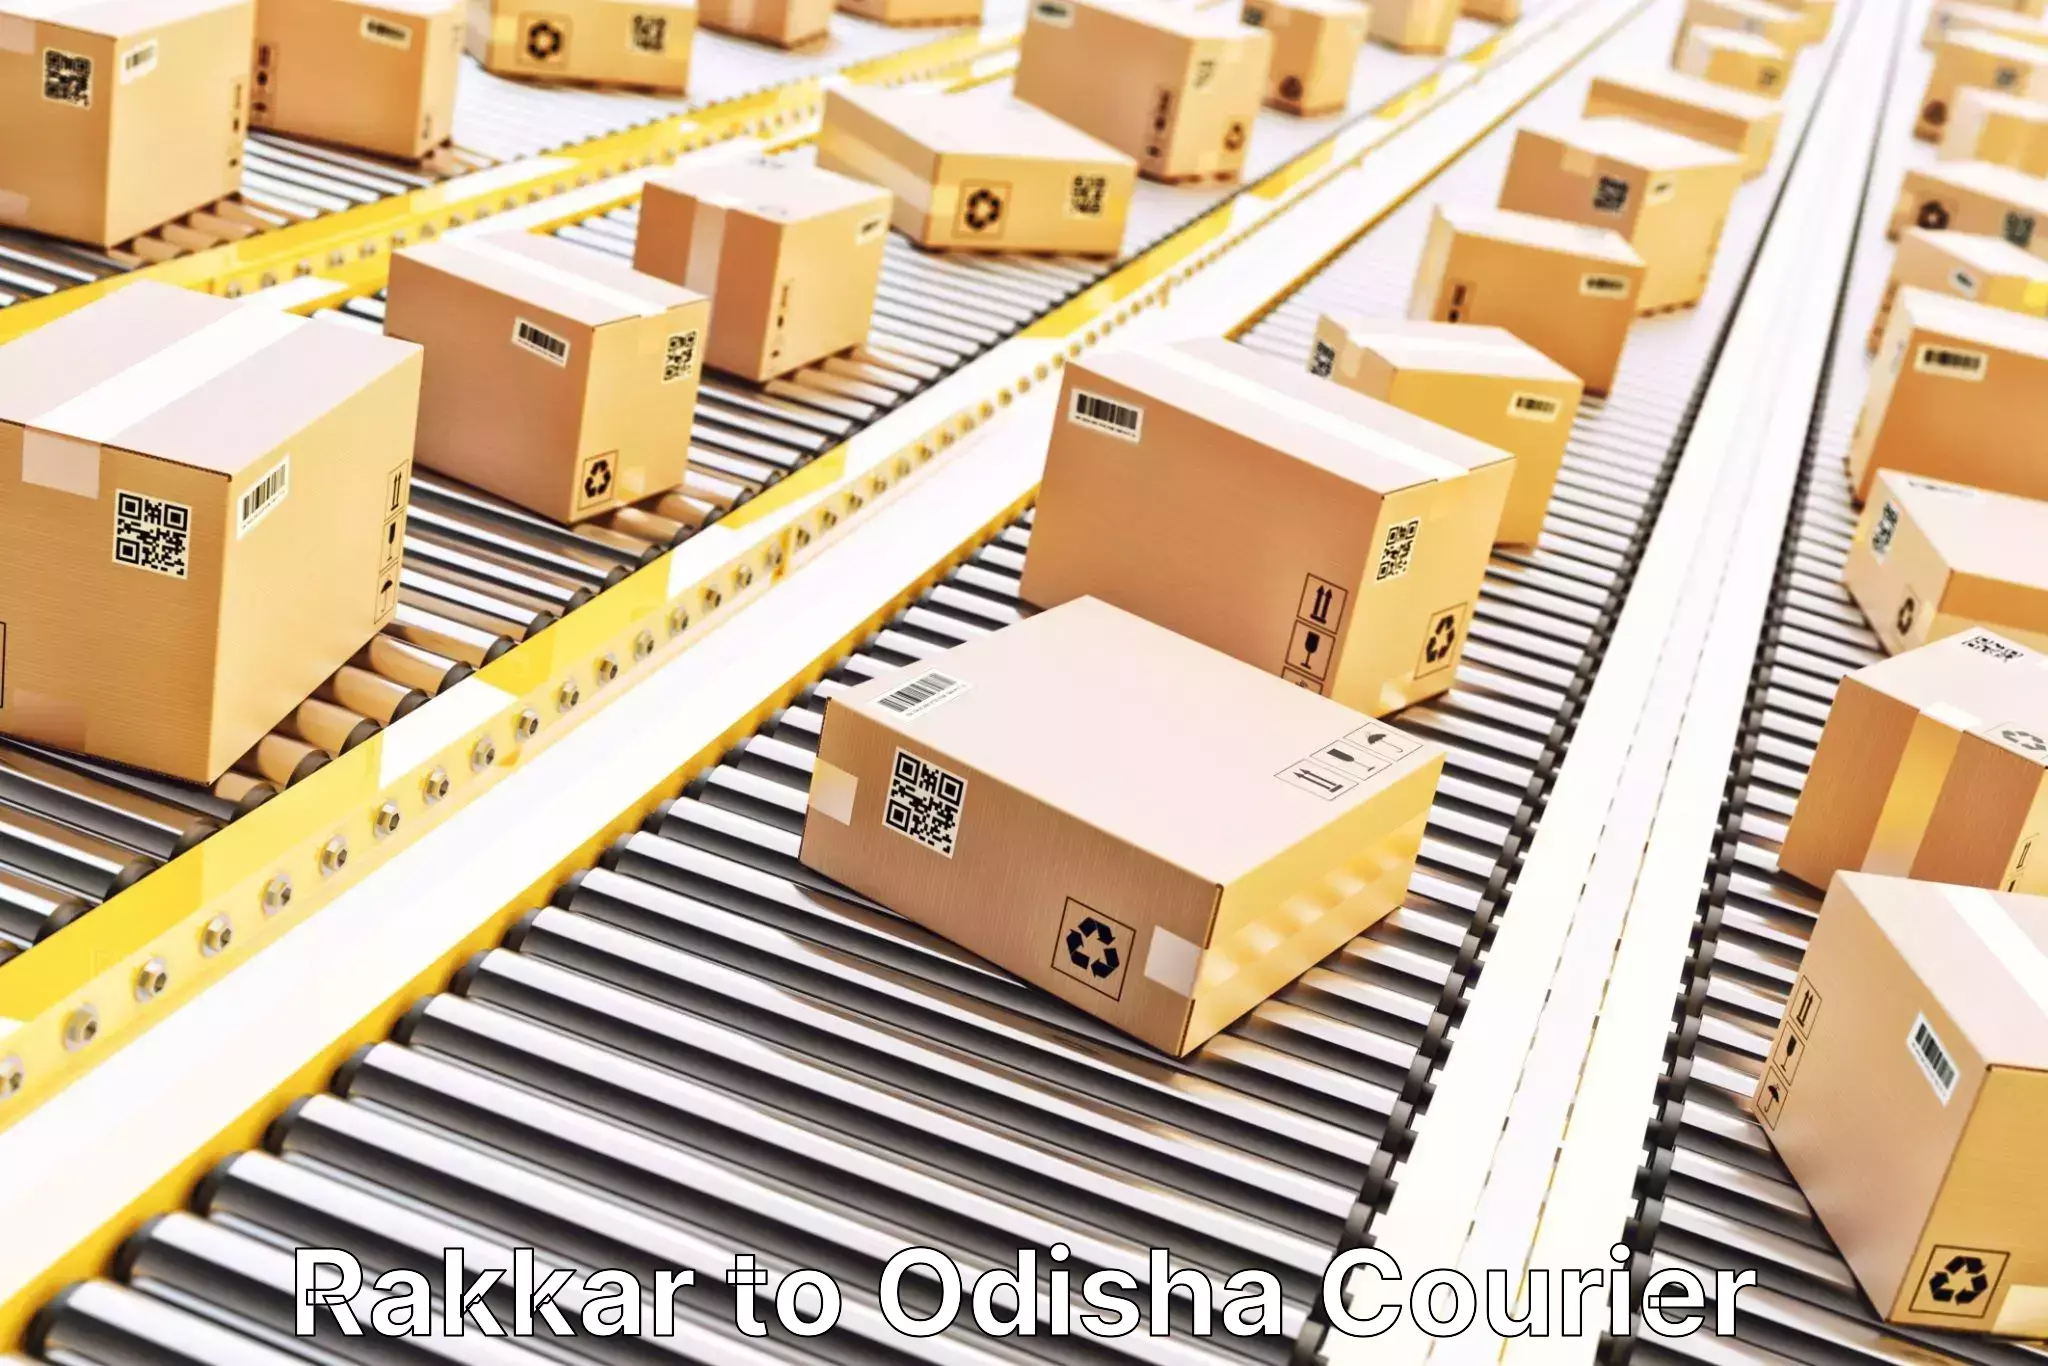 Express logistics providers Rakkar to Odisha